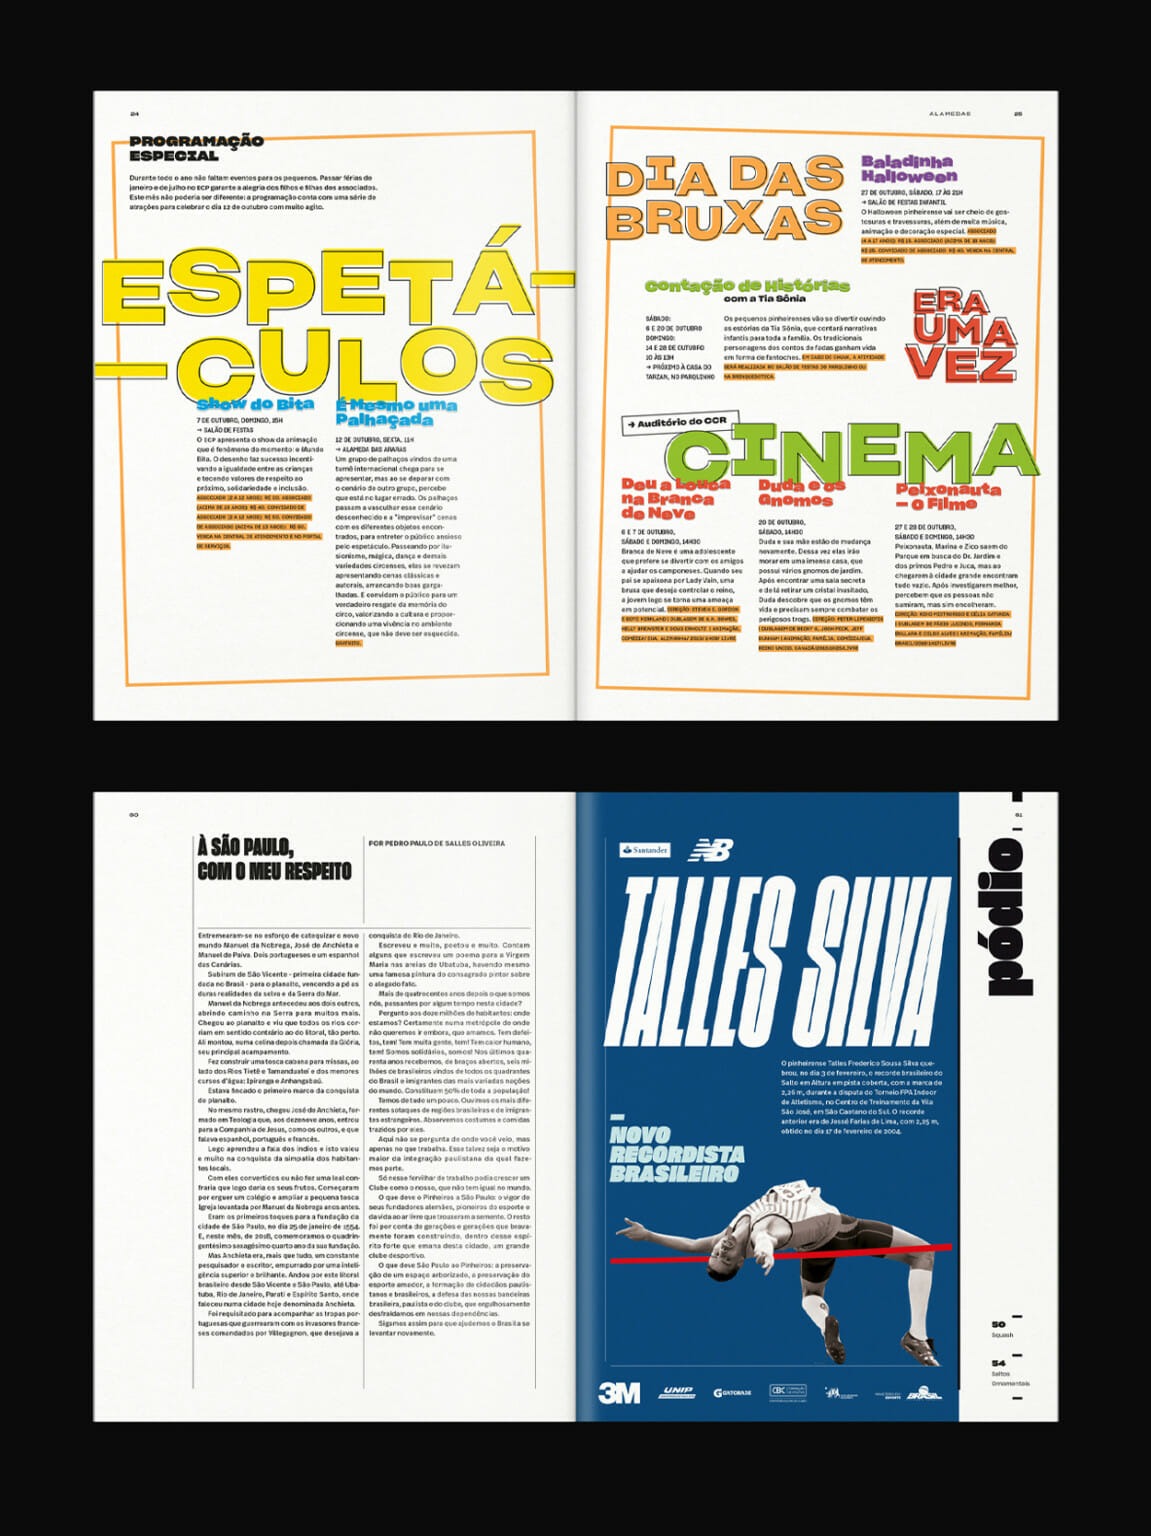  Esporte Clube Pinheiros体育刊物版面设计